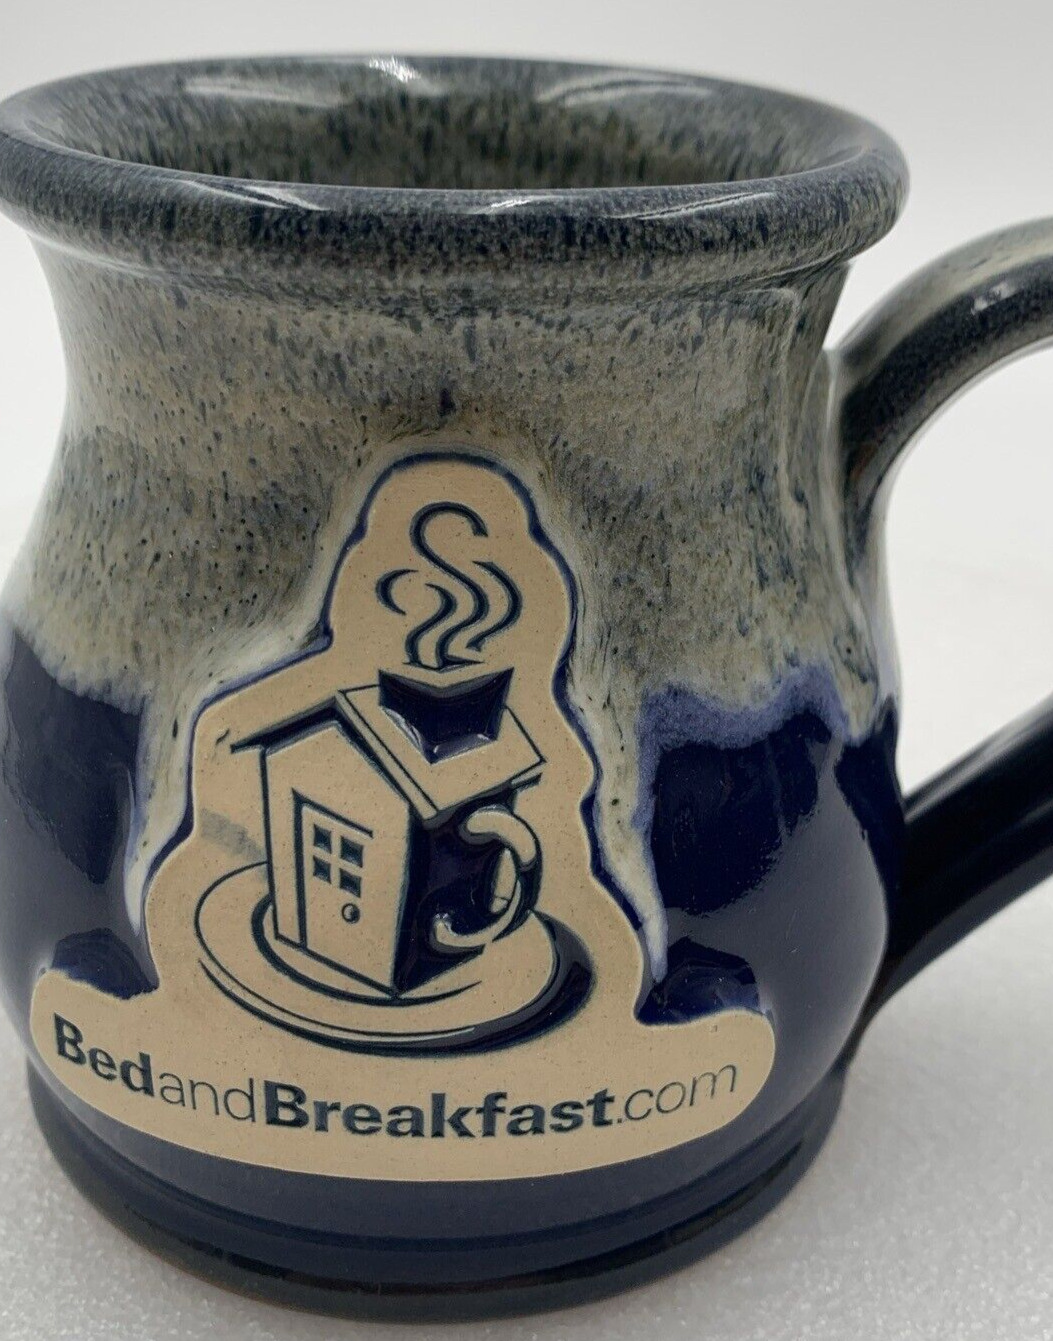 Deneen Pottery Coffee Mug Bedandbreakfast.com Blue